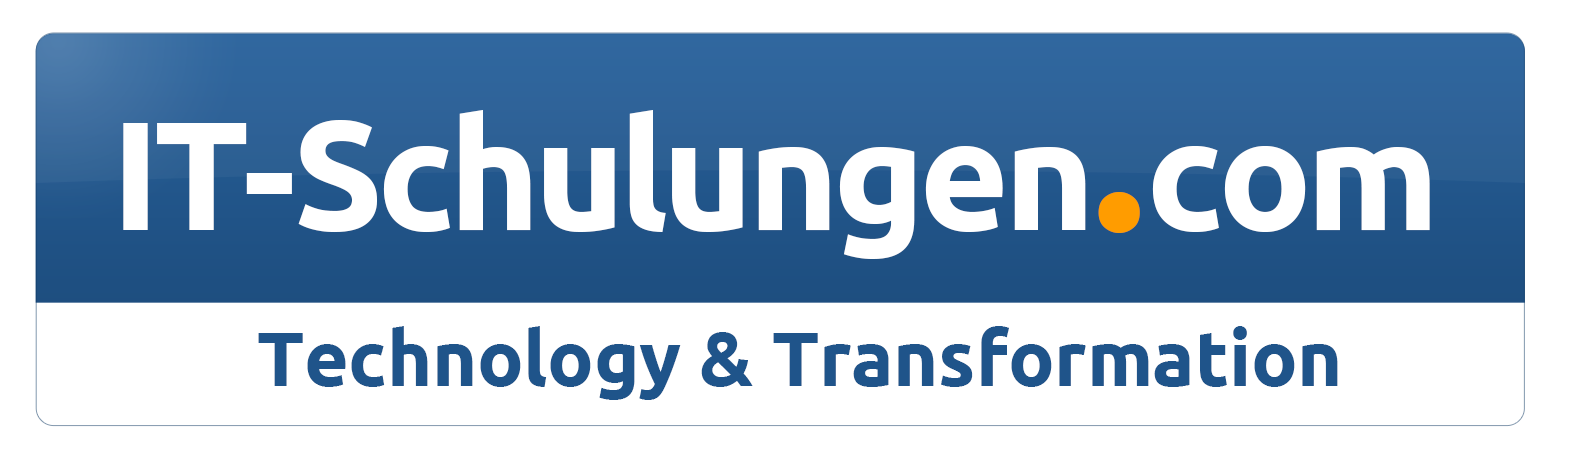 IT Schulungen logo